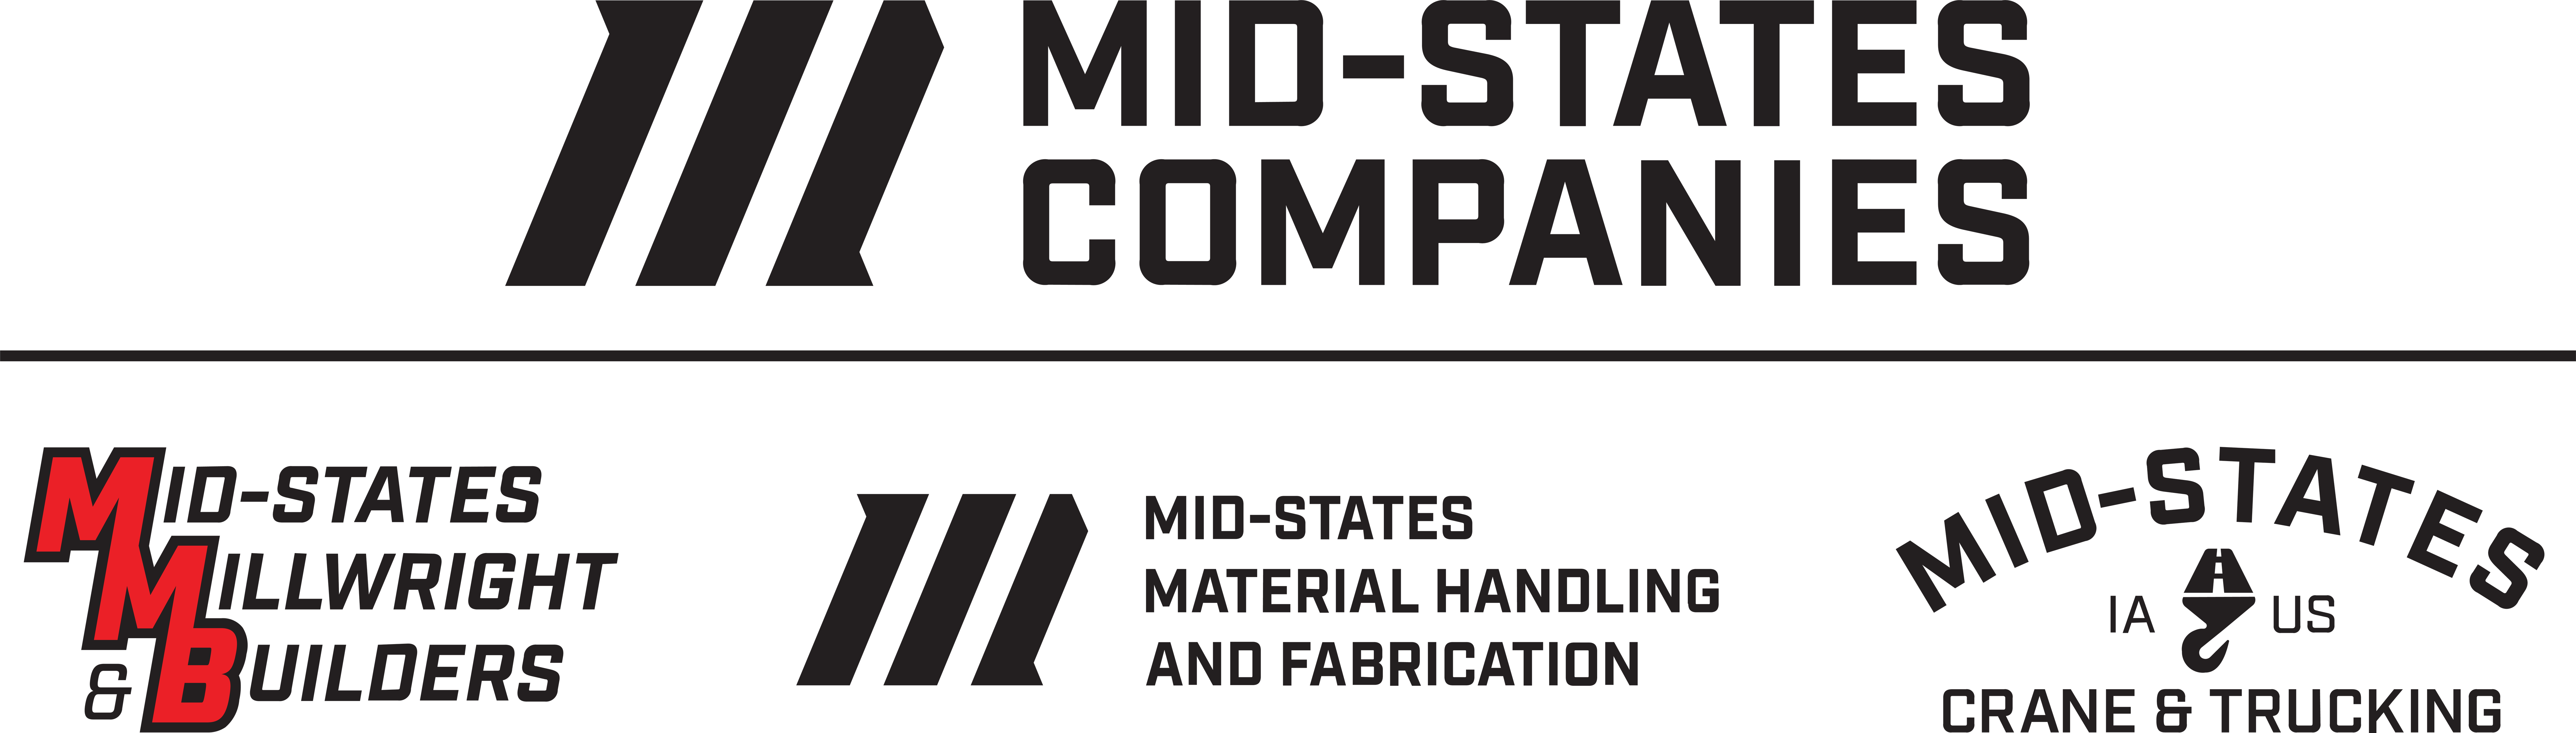 Mid-States Companies